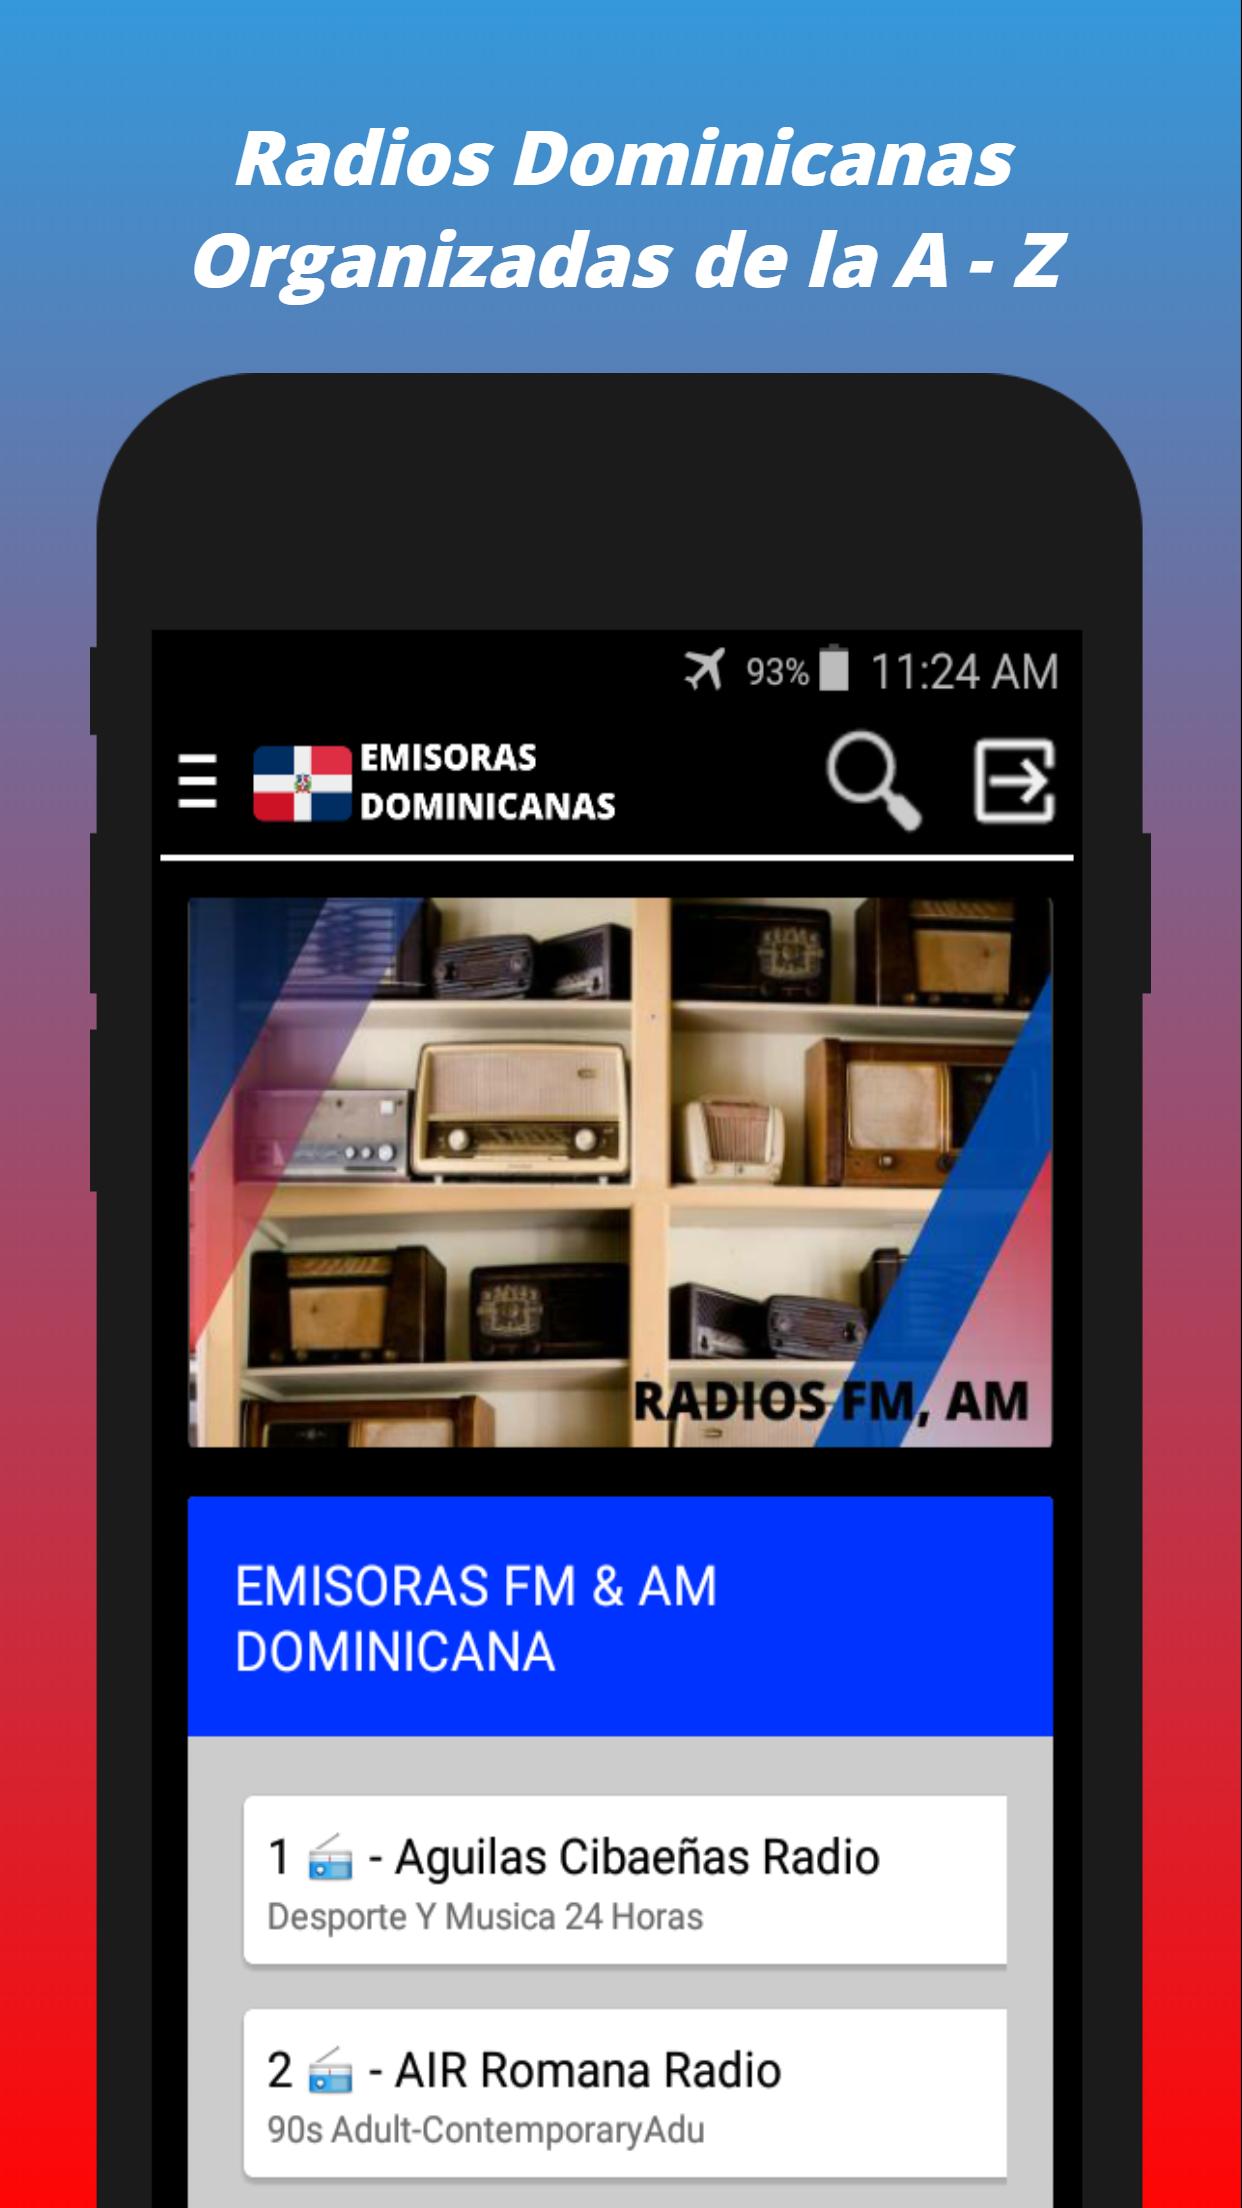 Emisoras Dominicanas - Radio Dominicanas Online APK for Android Download